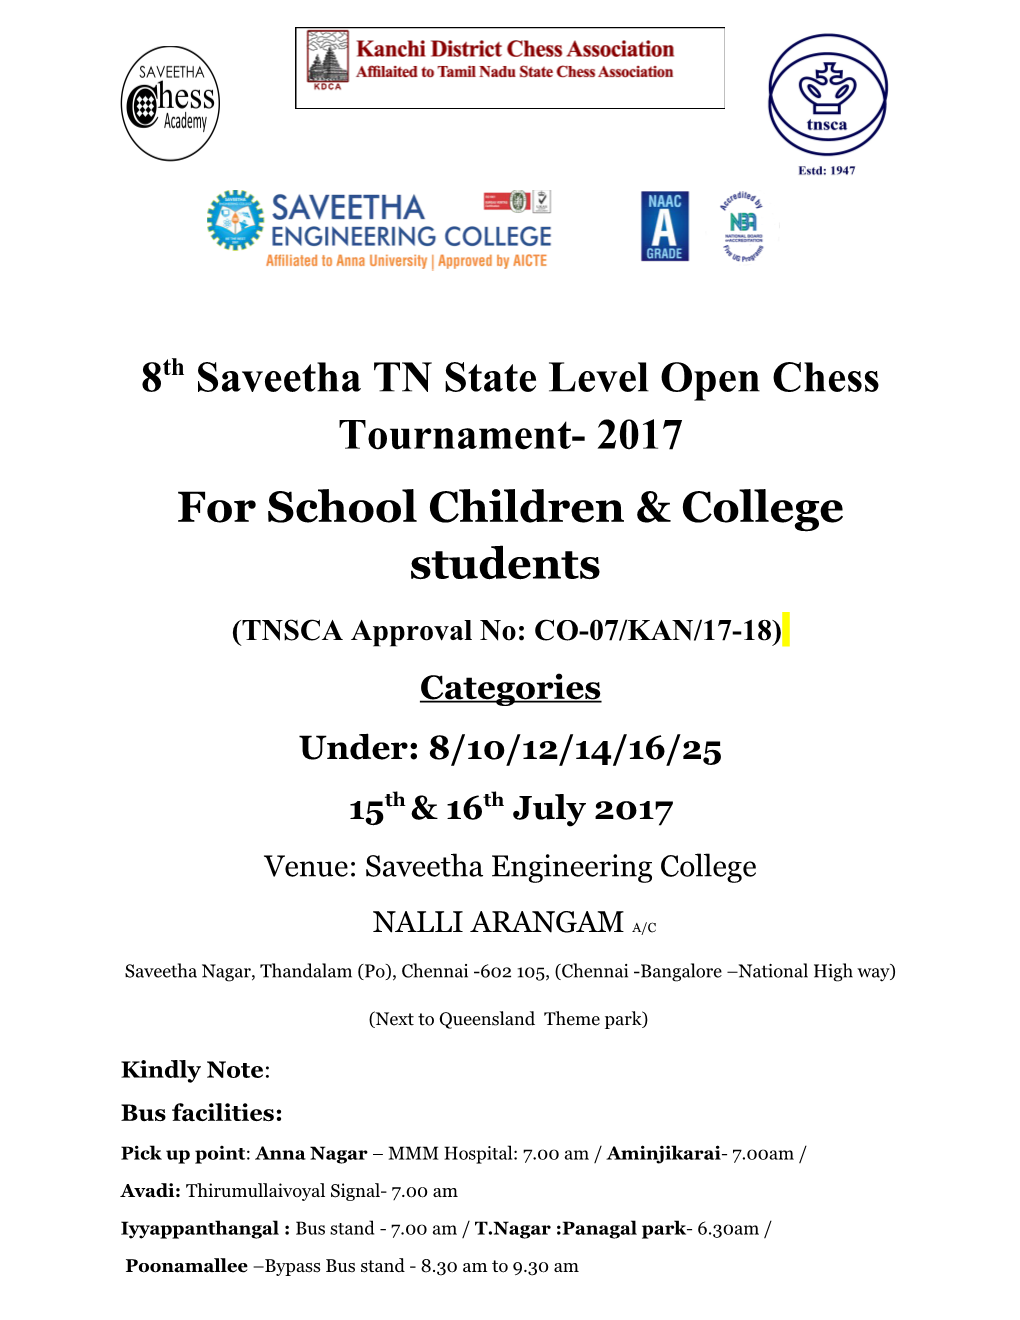 8Th Saveetha TN State Level Open Chess Tournament- 2017